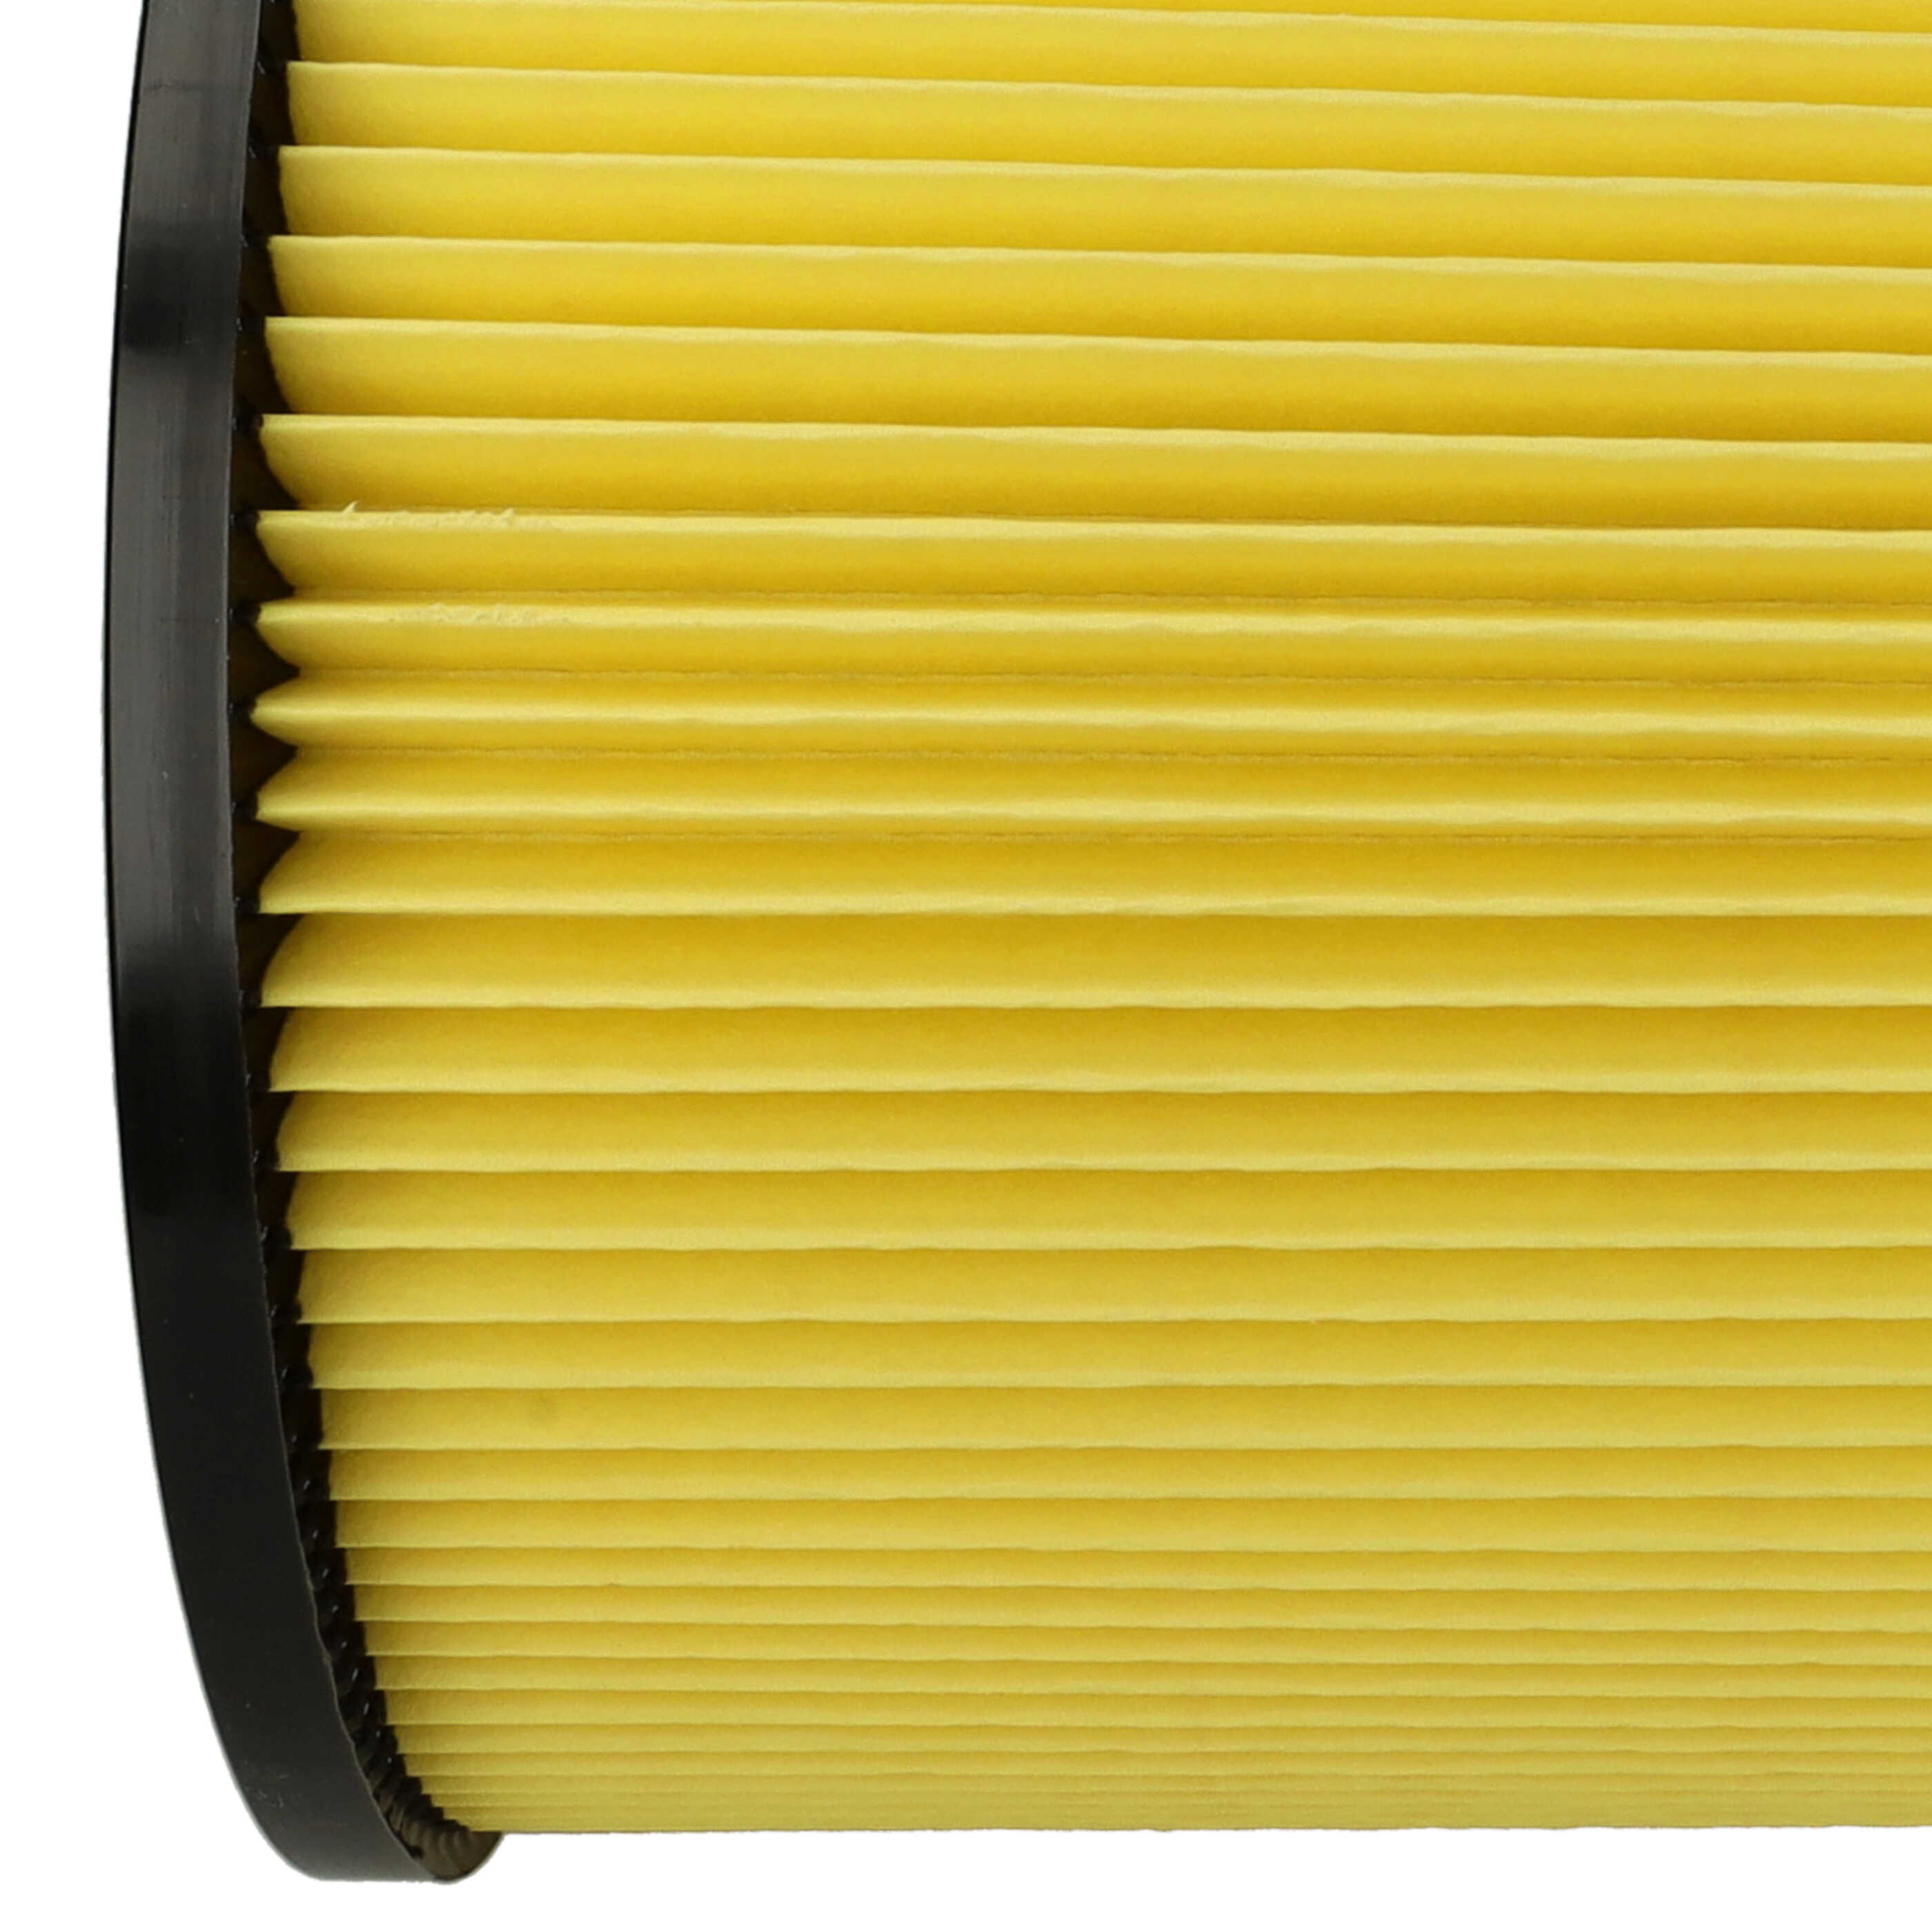 Filtro reemplaza Thomas 787115, 195118 para aspiradora filtro de cartucho, negro / amarillo